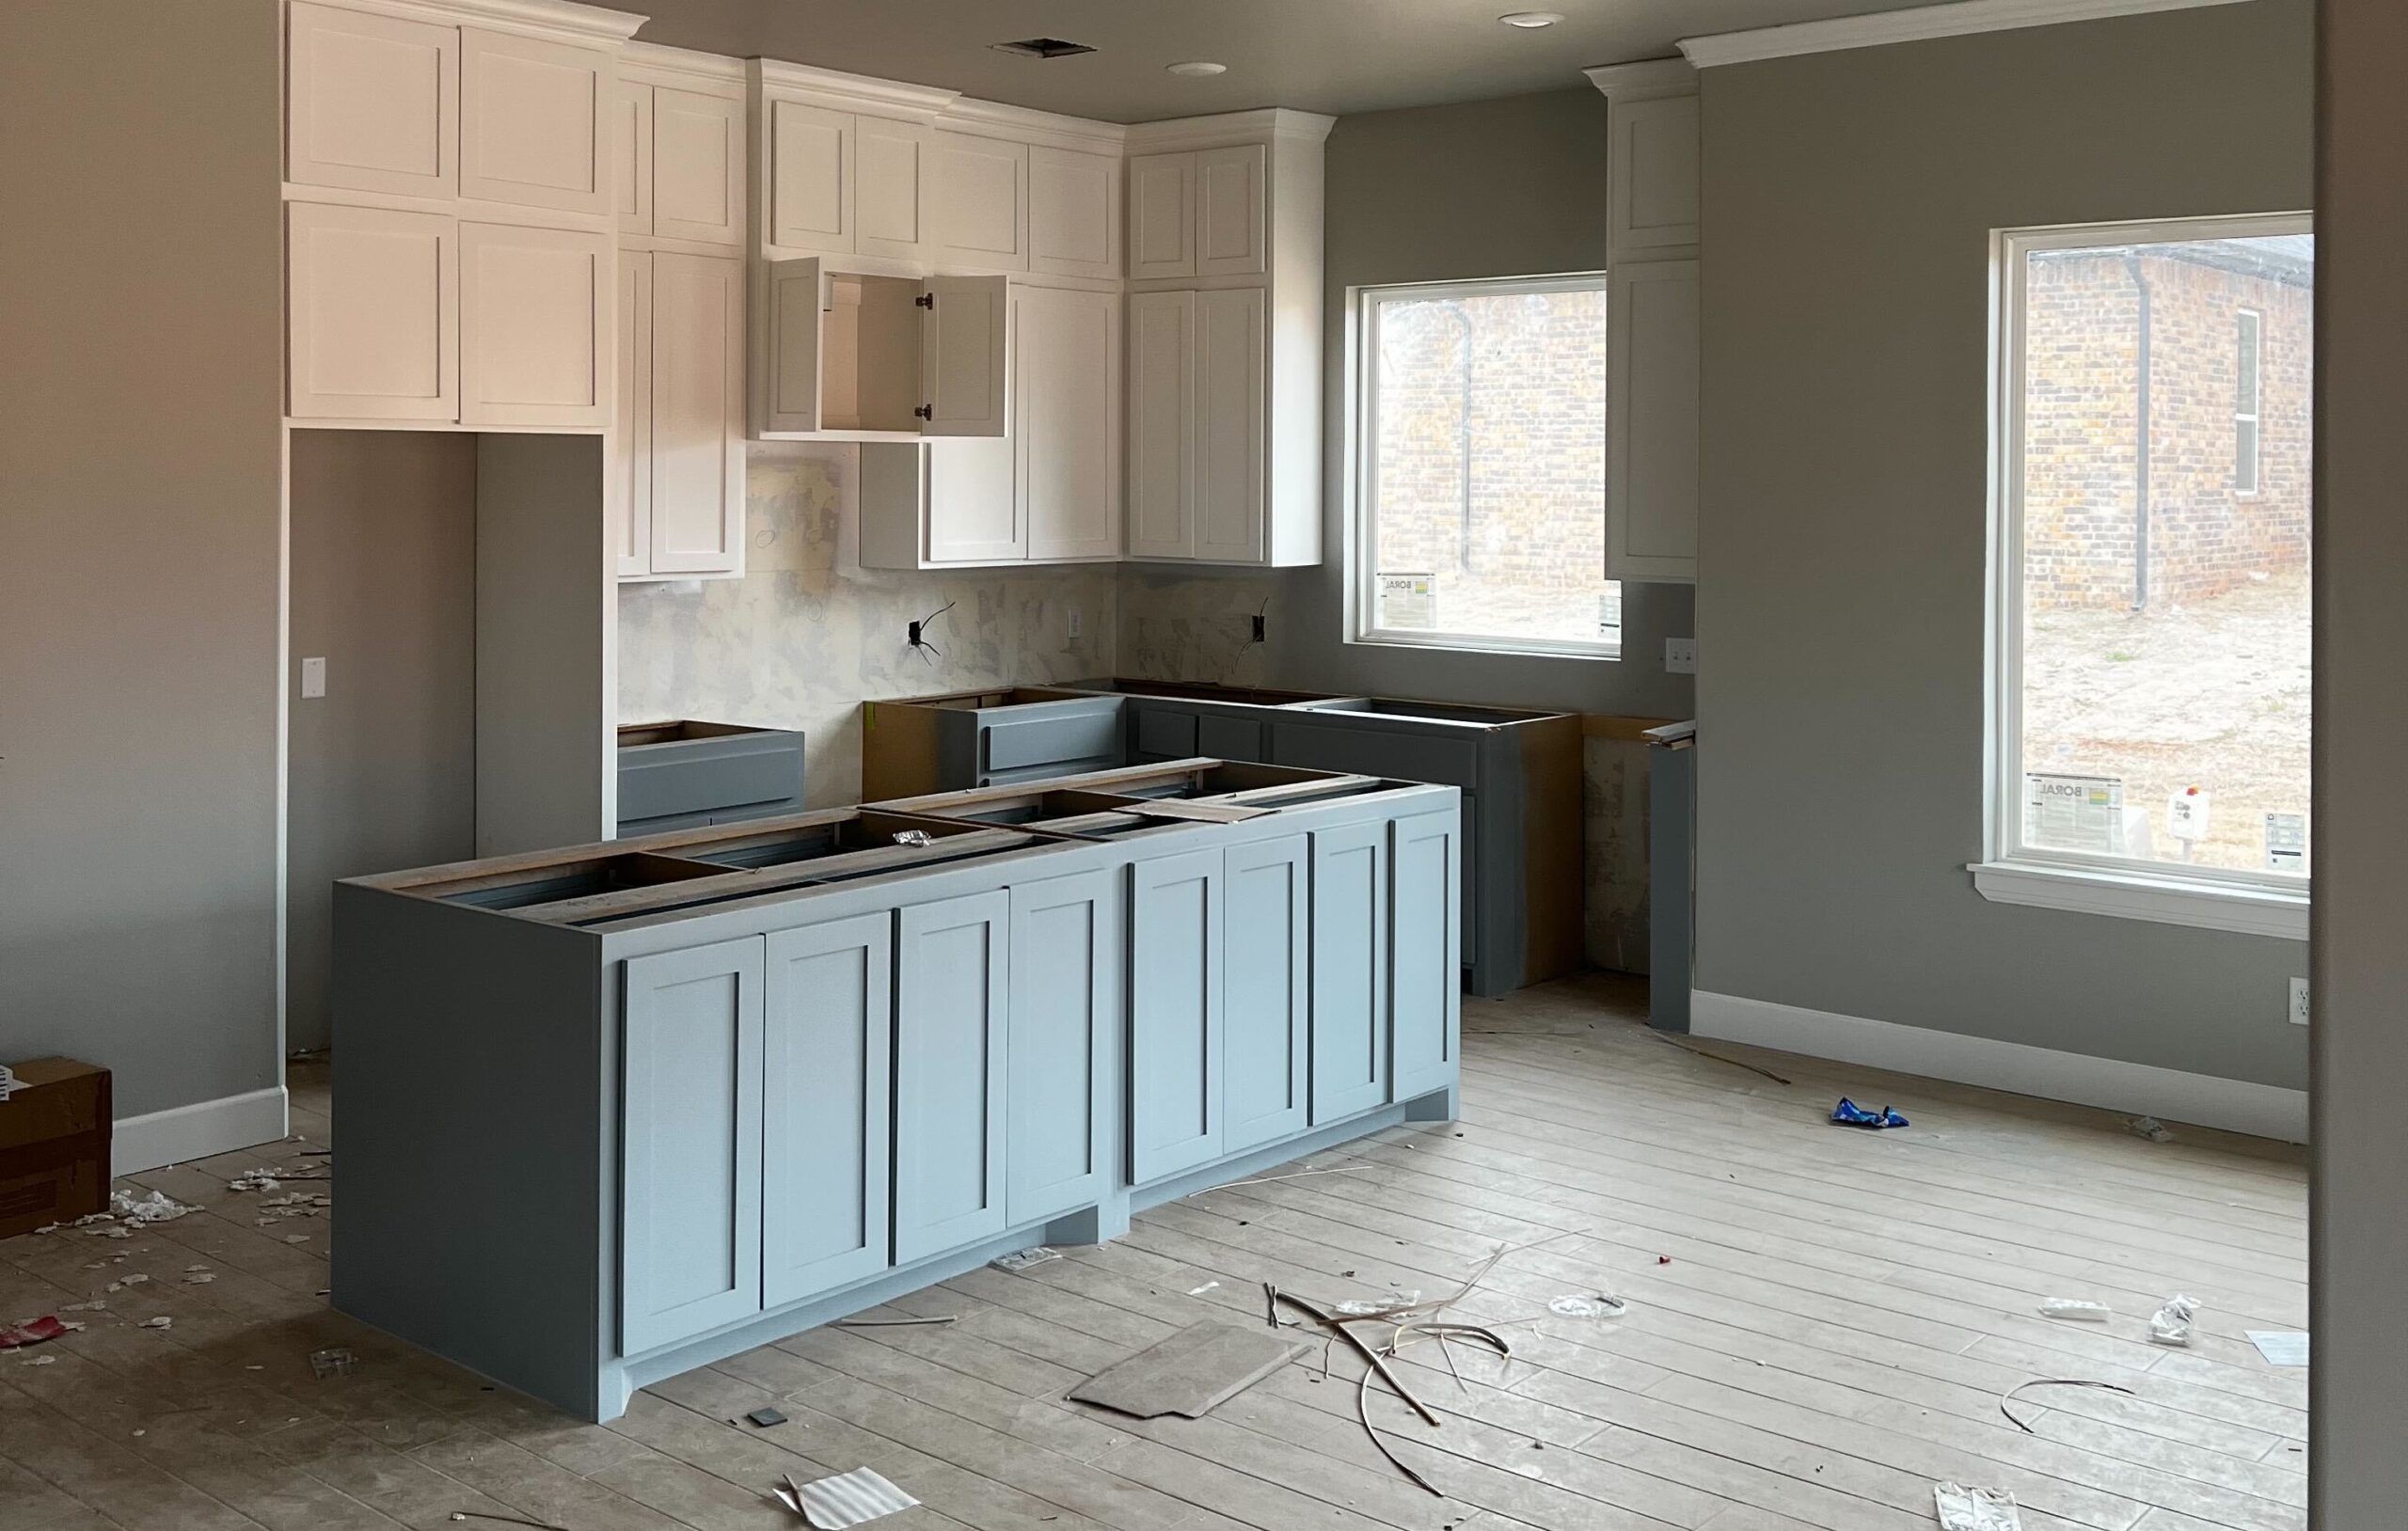 kitchen remodeling project progress